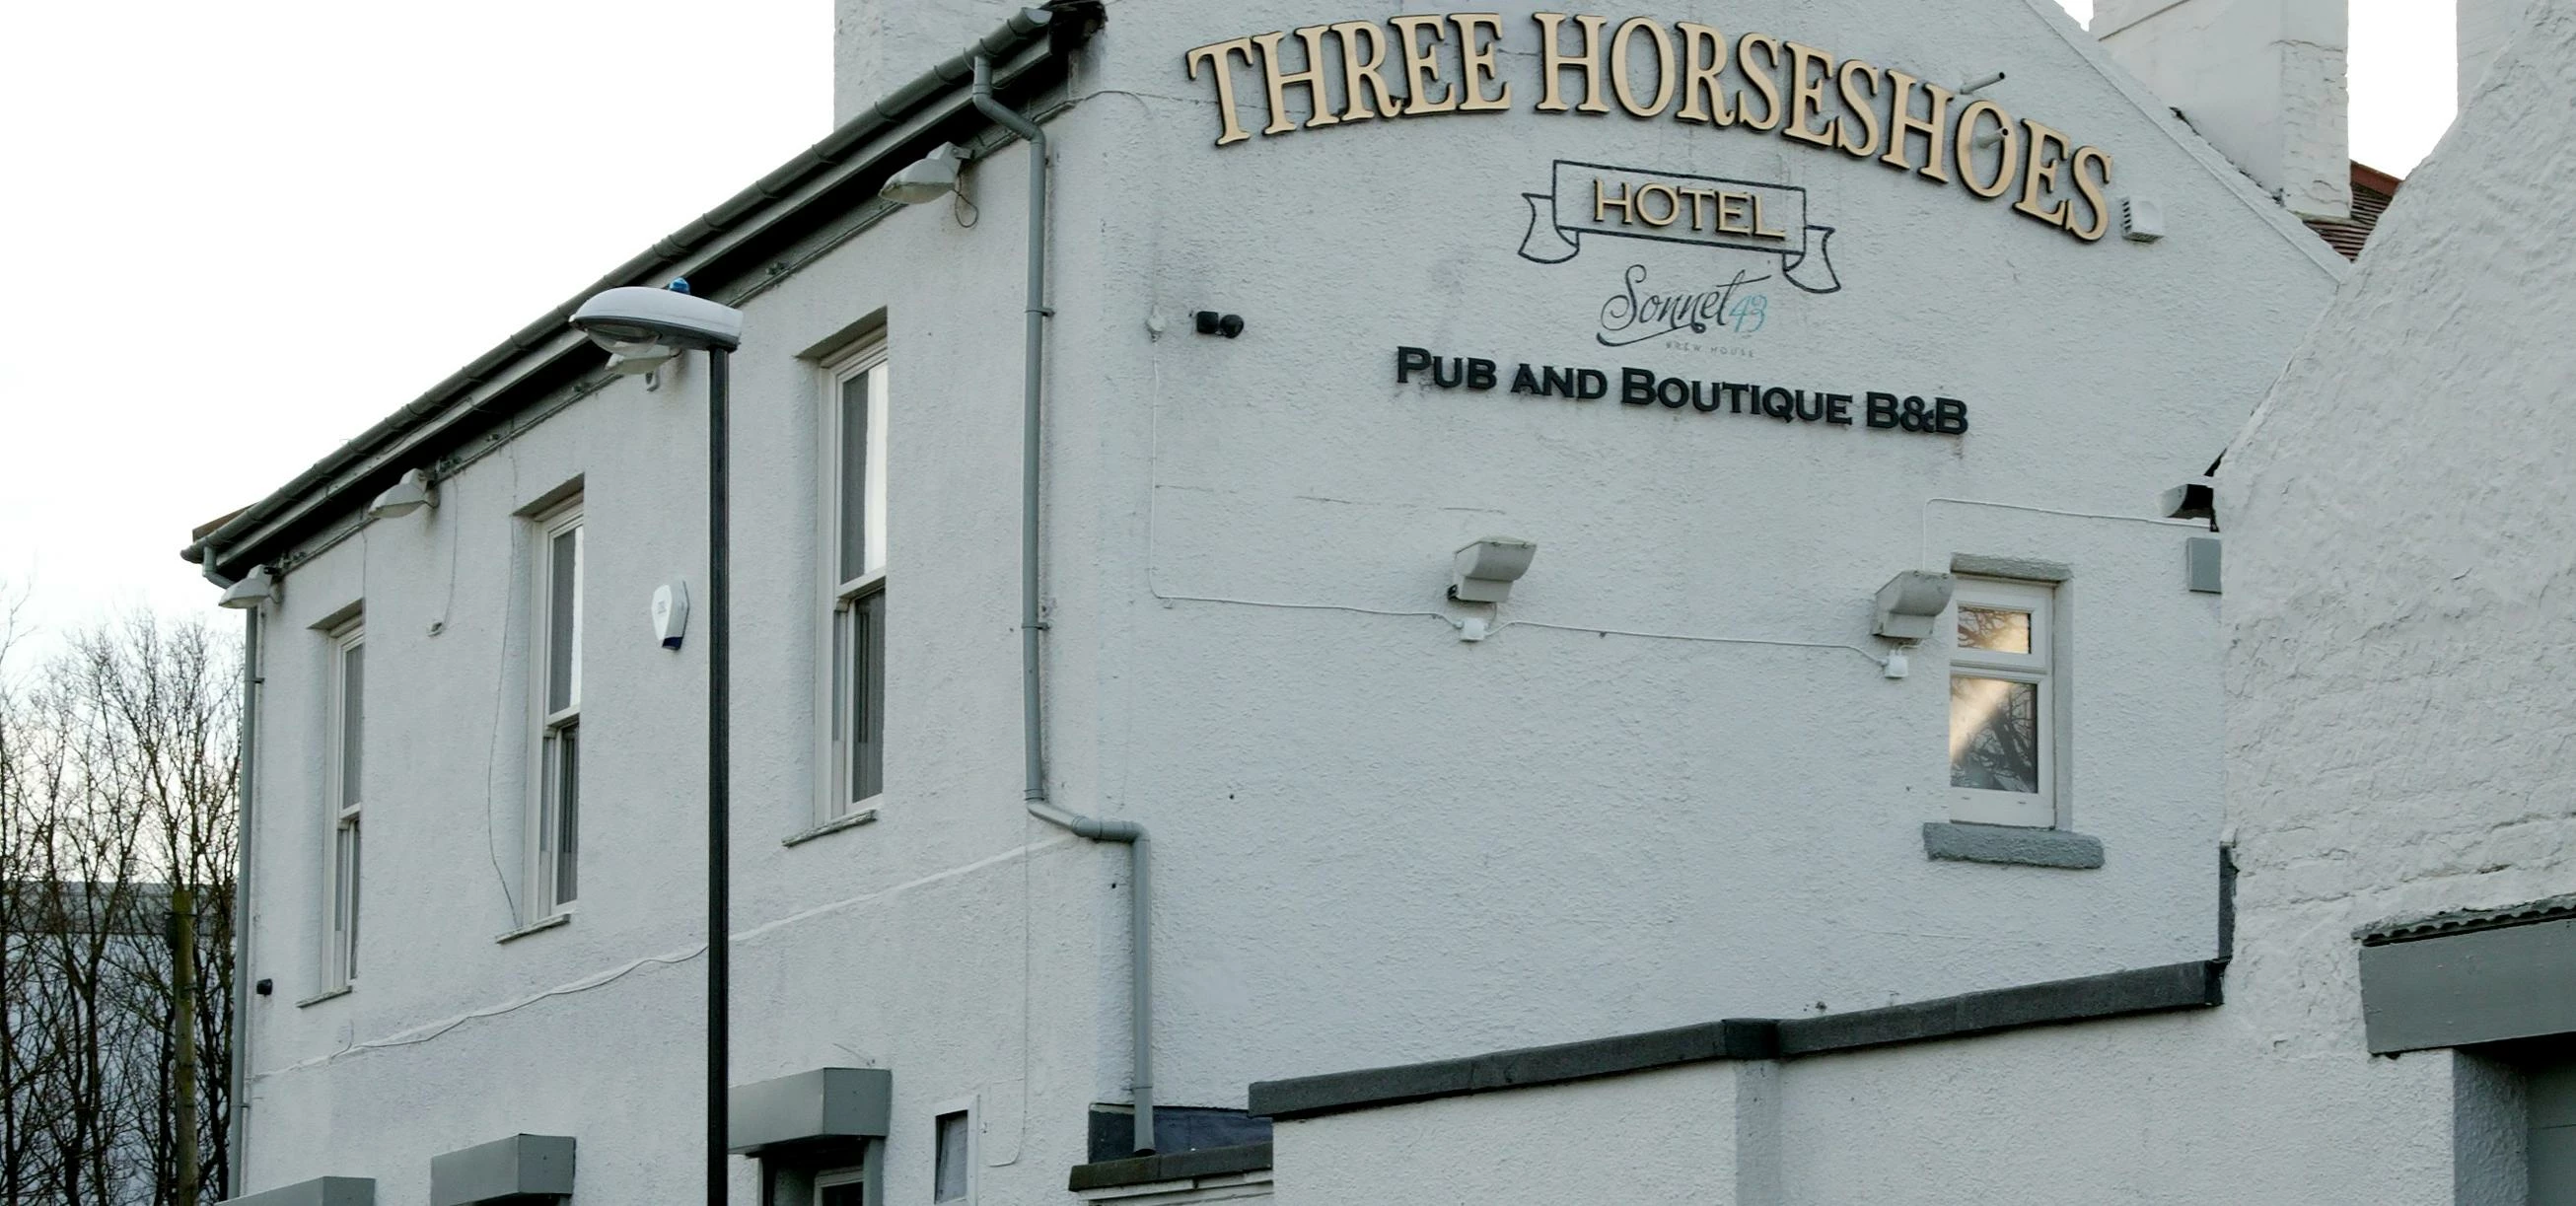 The Three Horseshoes Hotel